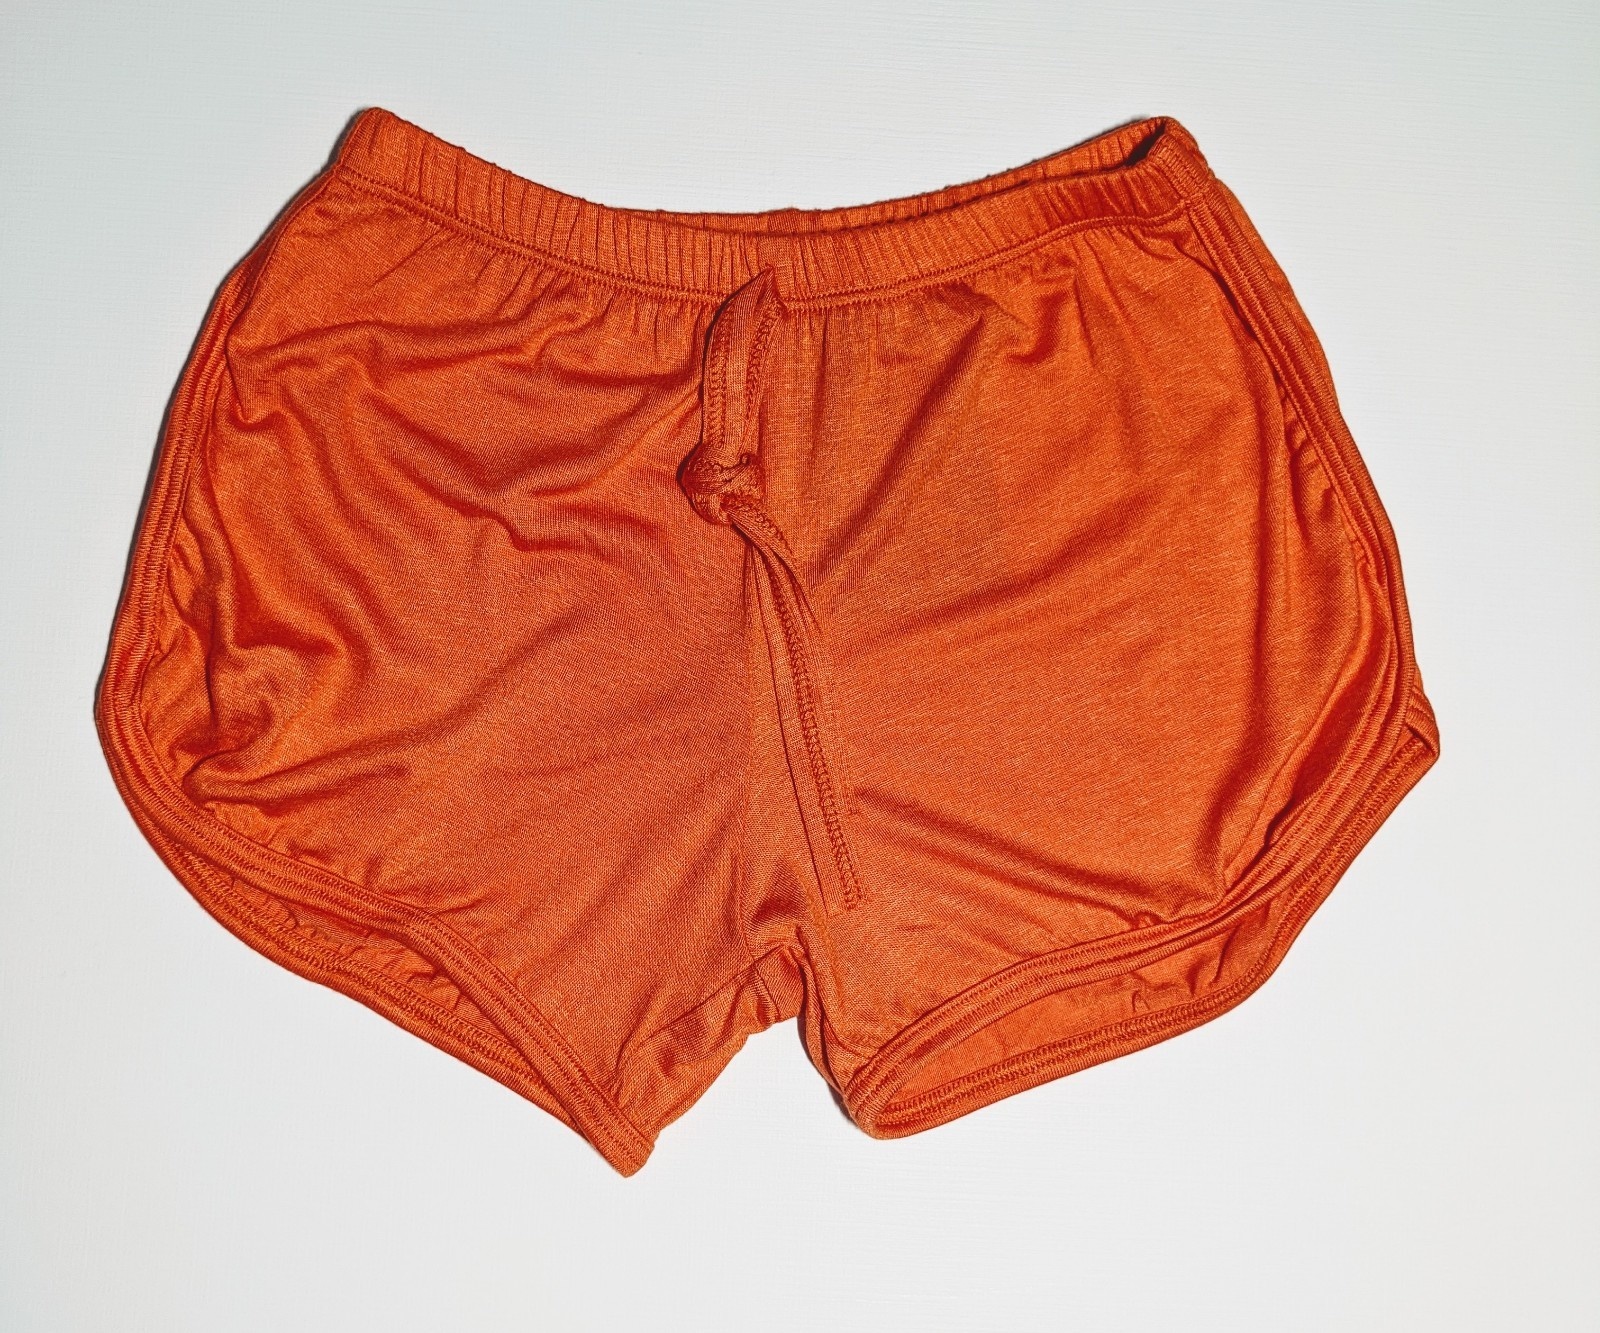 Area Code 407 Tween / Teen Knit Shorts